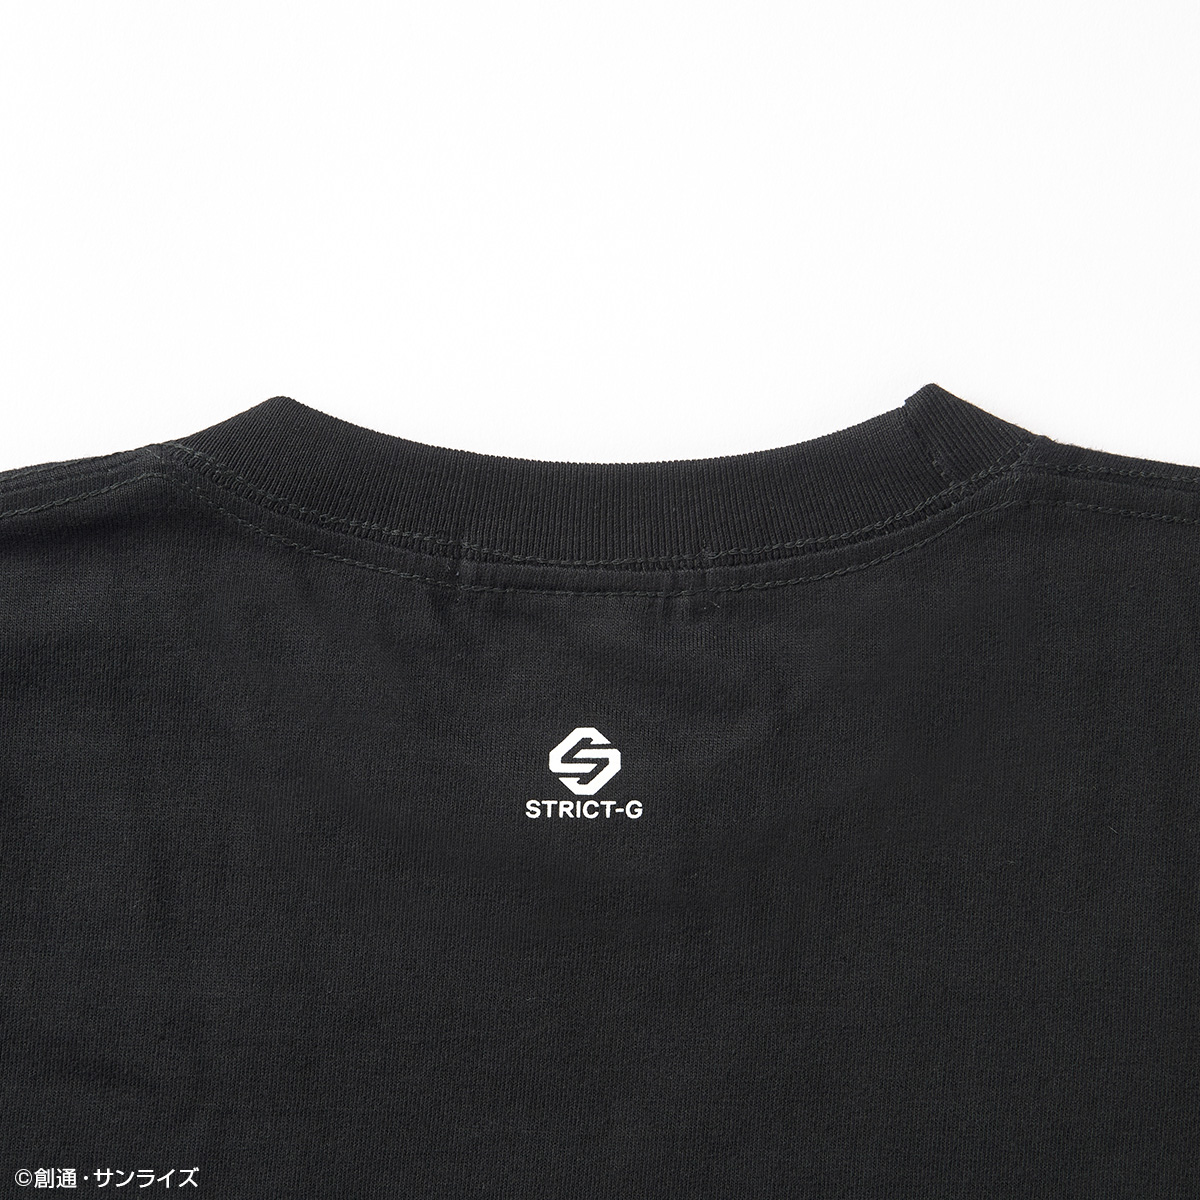 STRICT-G『機動戦士ガンダム』Tシャツコレクション CHAR AZNABLE 001